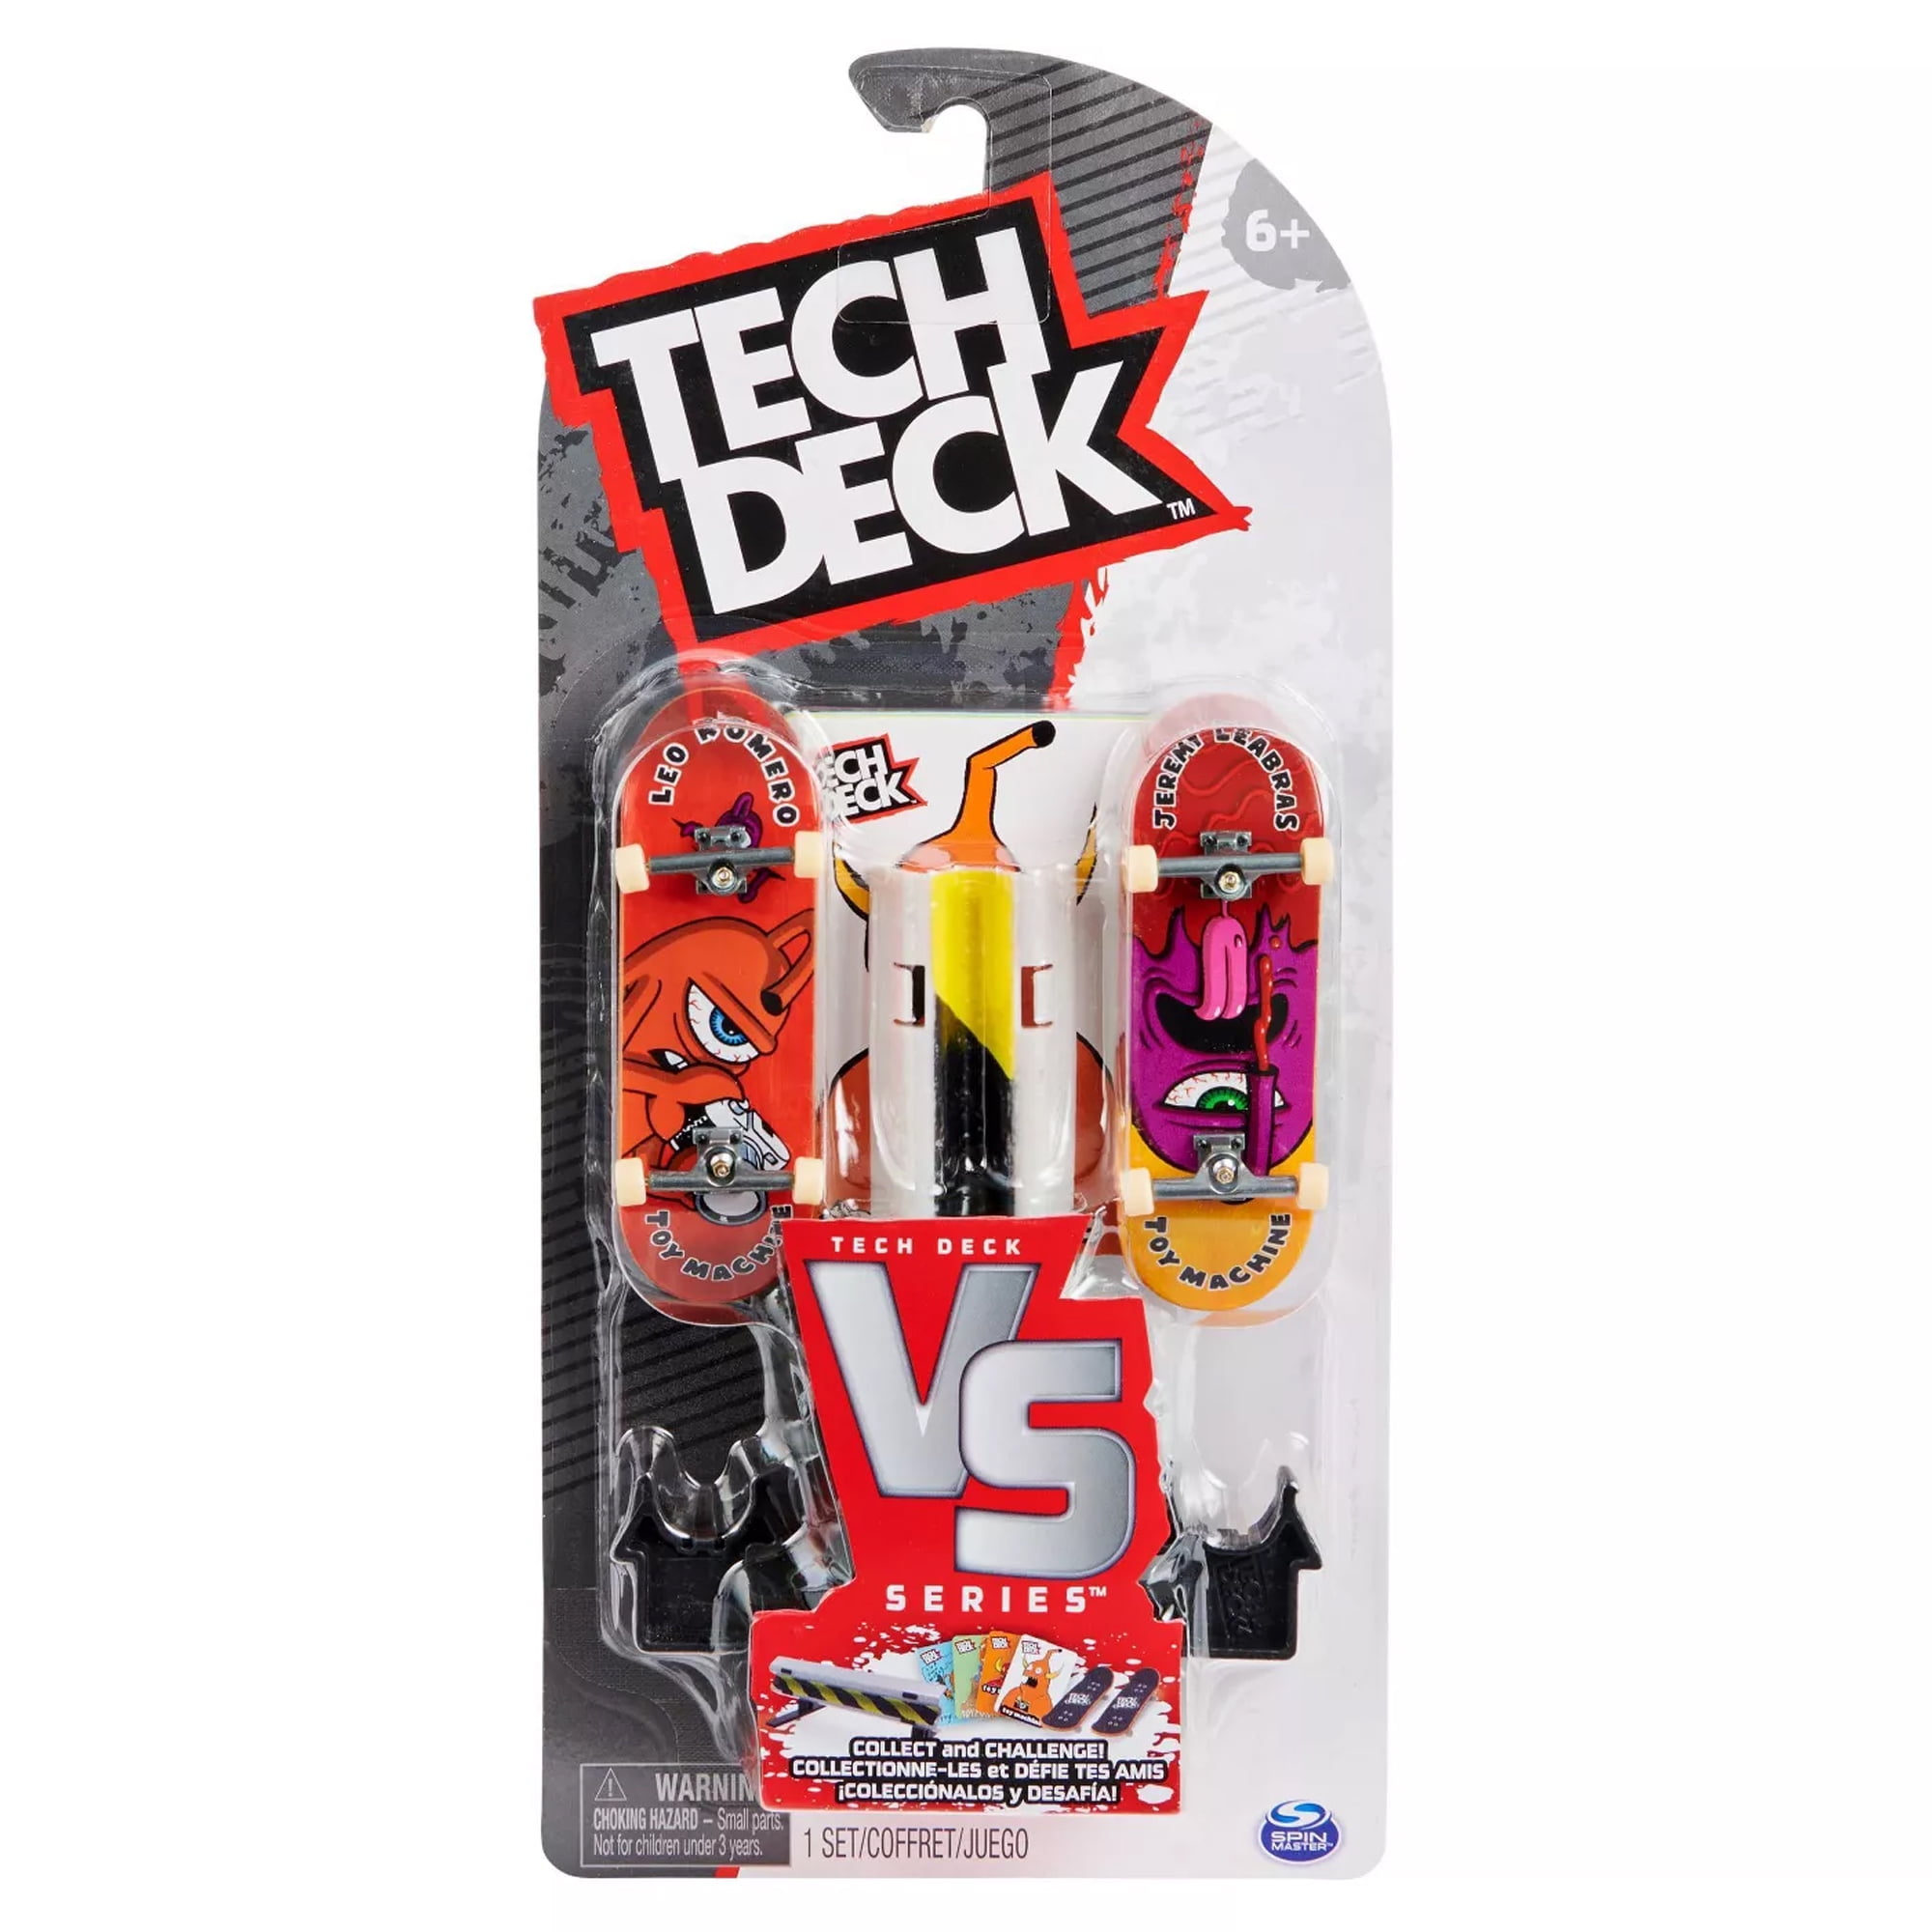 TECH DECK Rare Santa Cruz Fingerboard Skateboard New Free Shipping Toy 